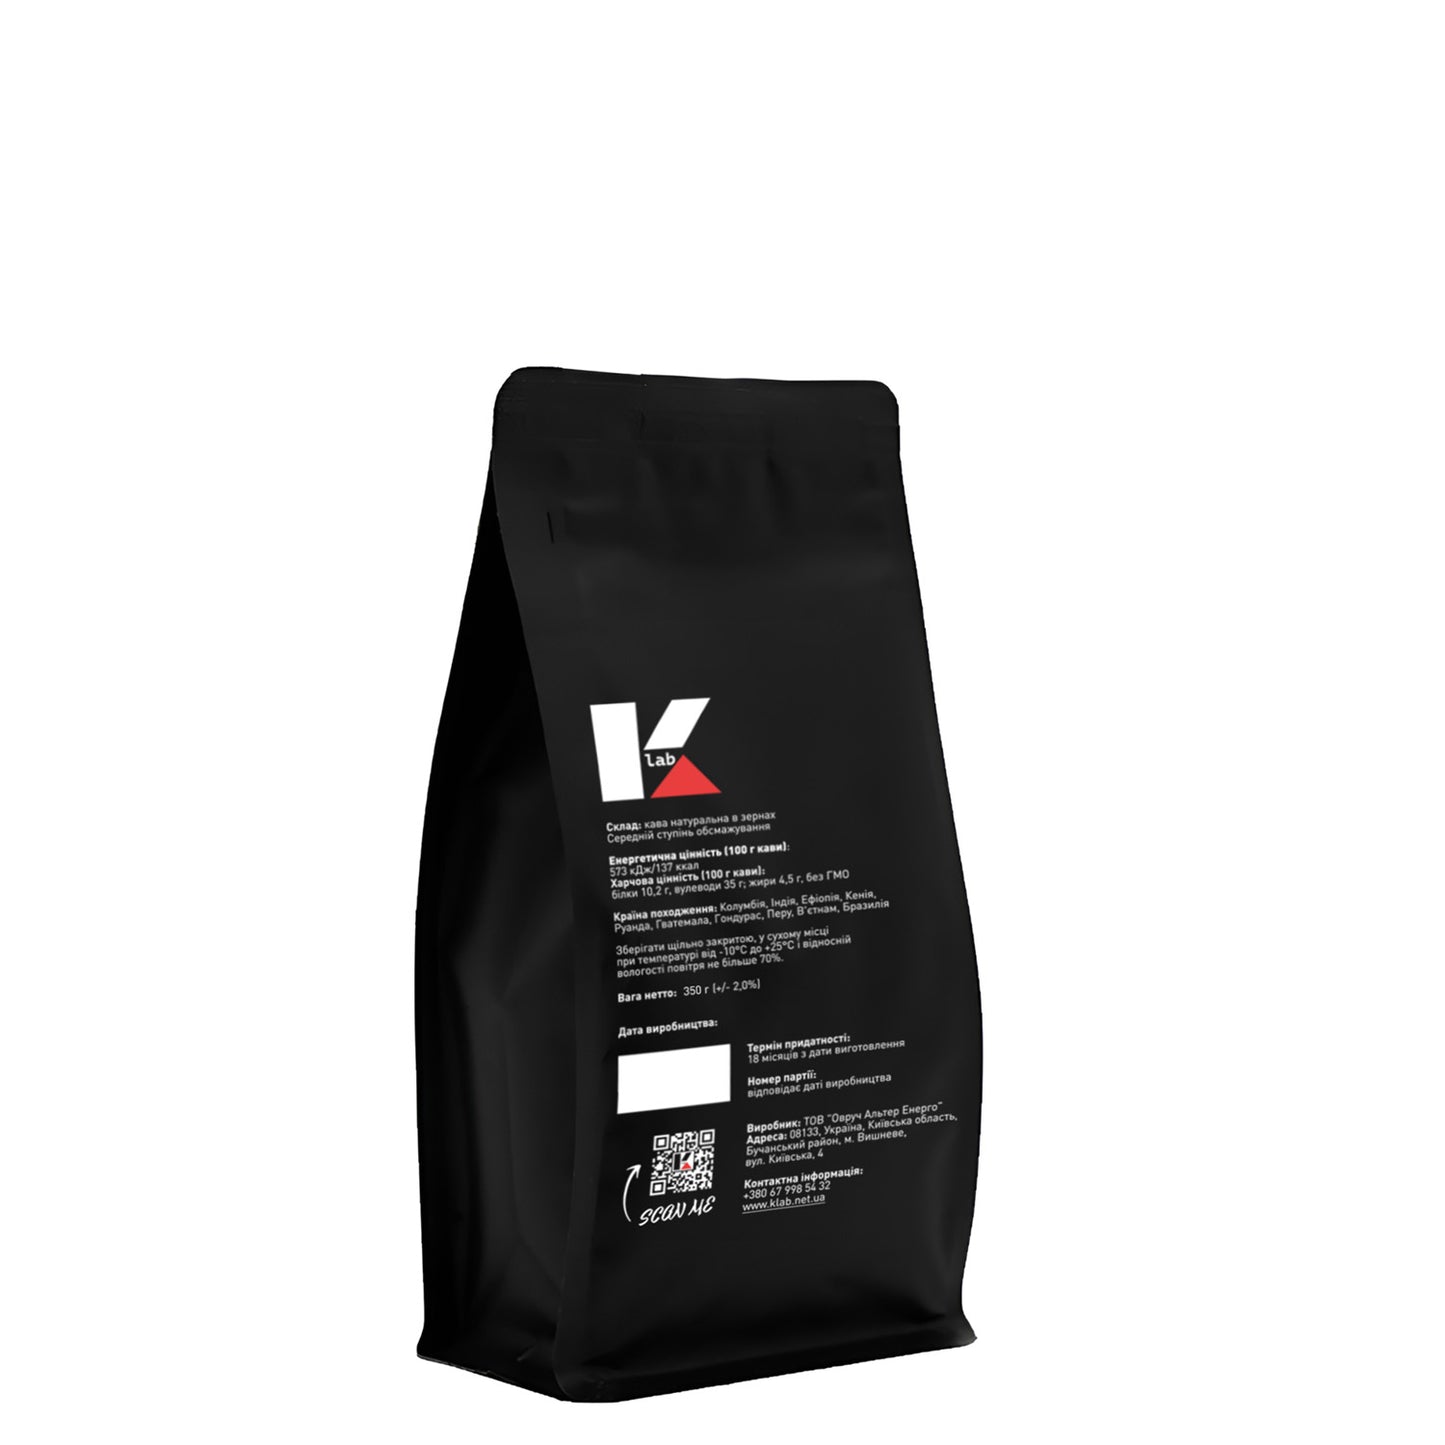 COFFEE STORY №10 - Klab (0.35kg back)